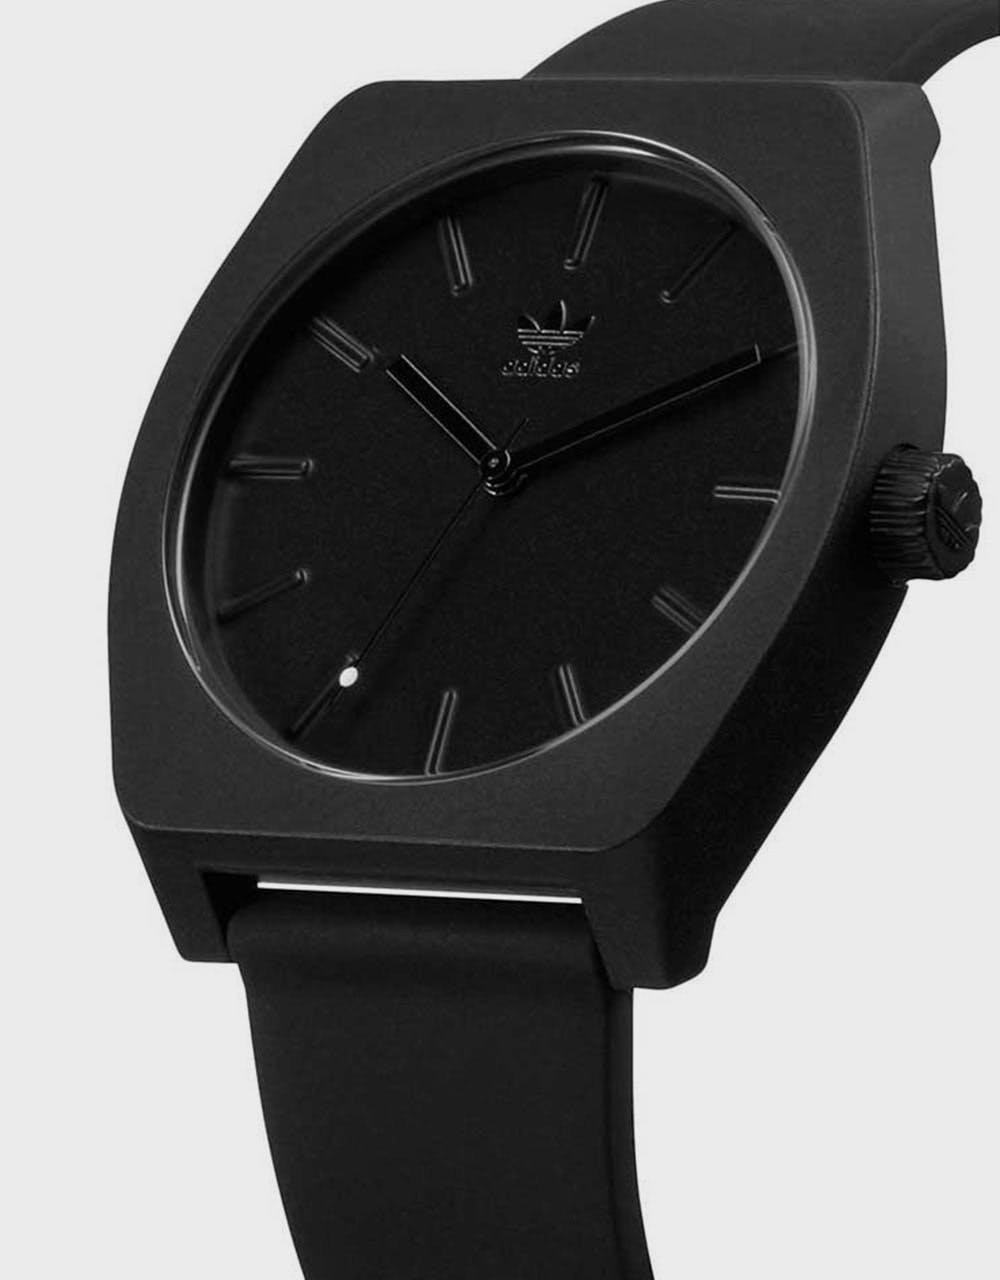 Adidas Process SP1 Watch - All Black